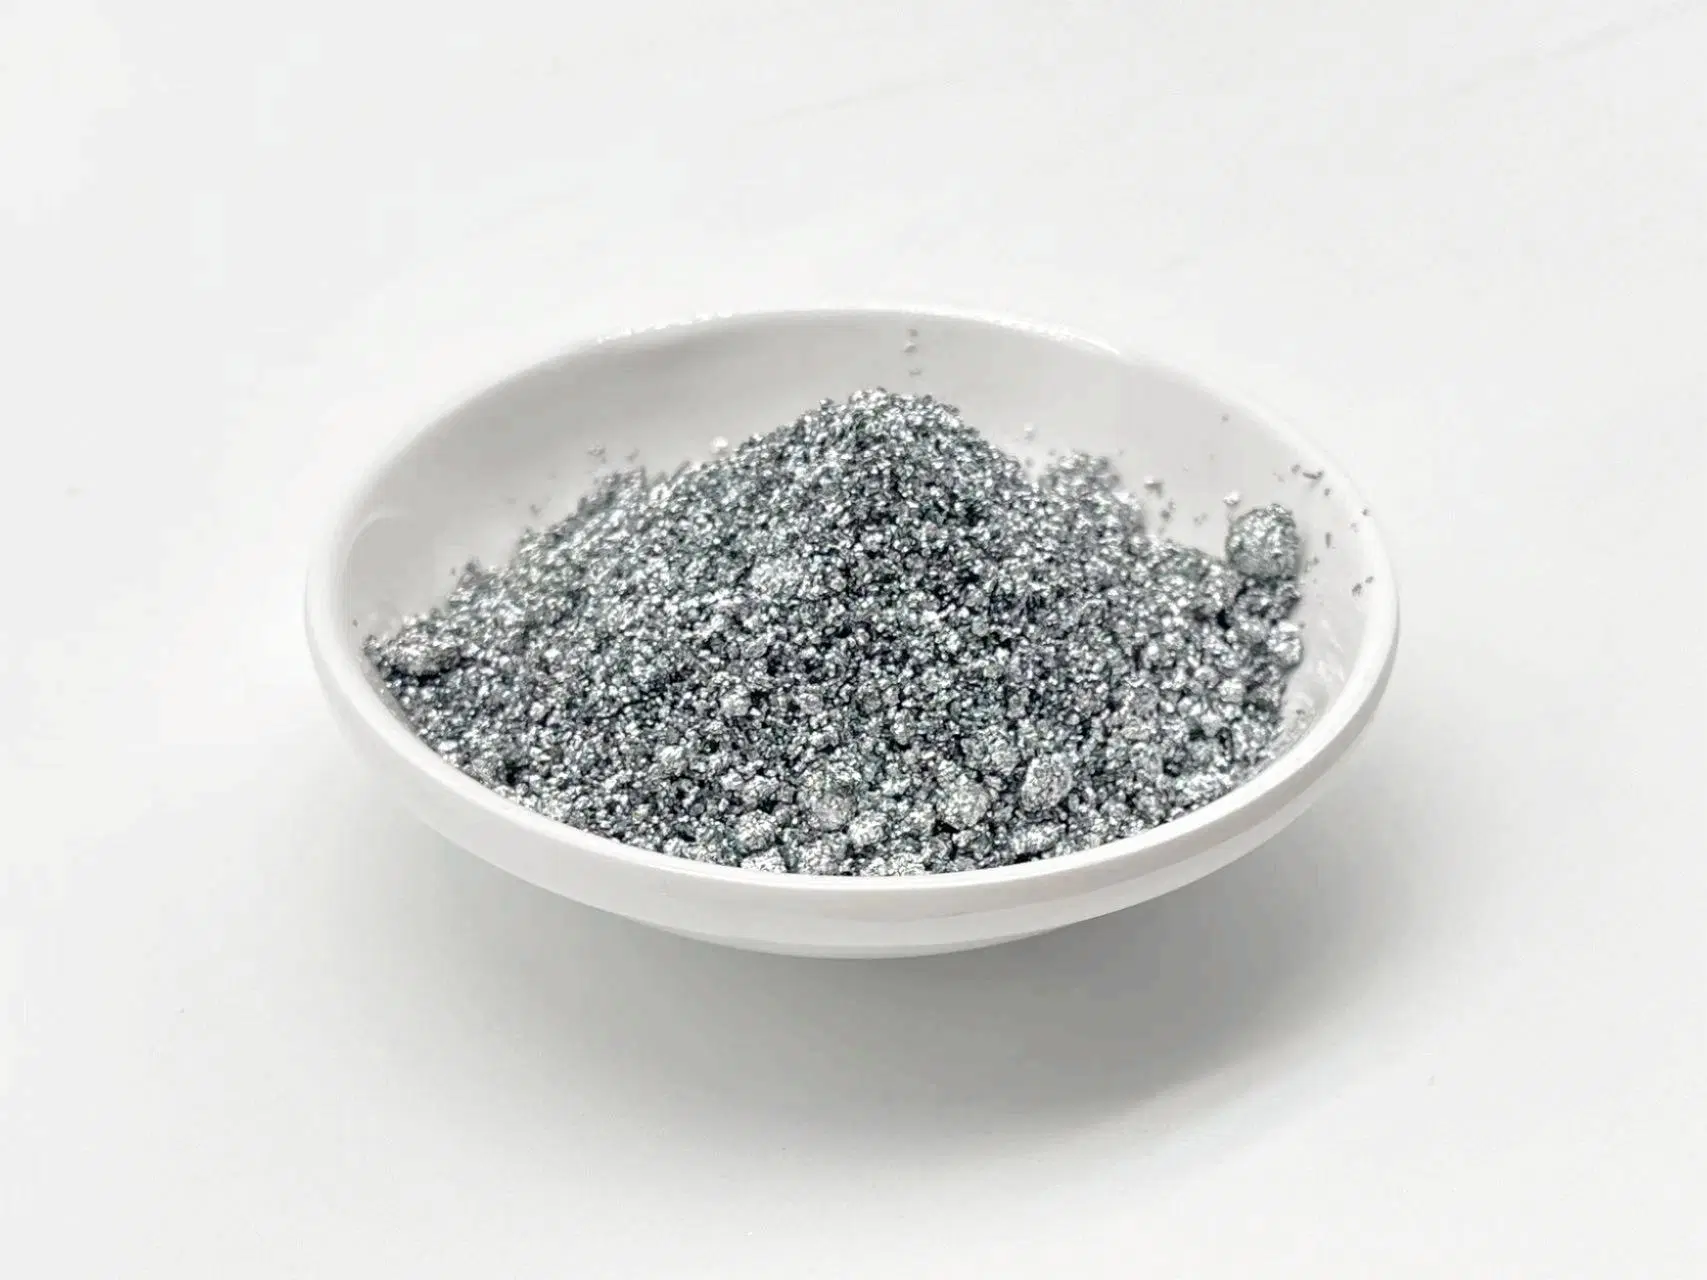 Non-Leafing pegar aluminio en polvo de plata fina y blanca Pegar Oil-Based